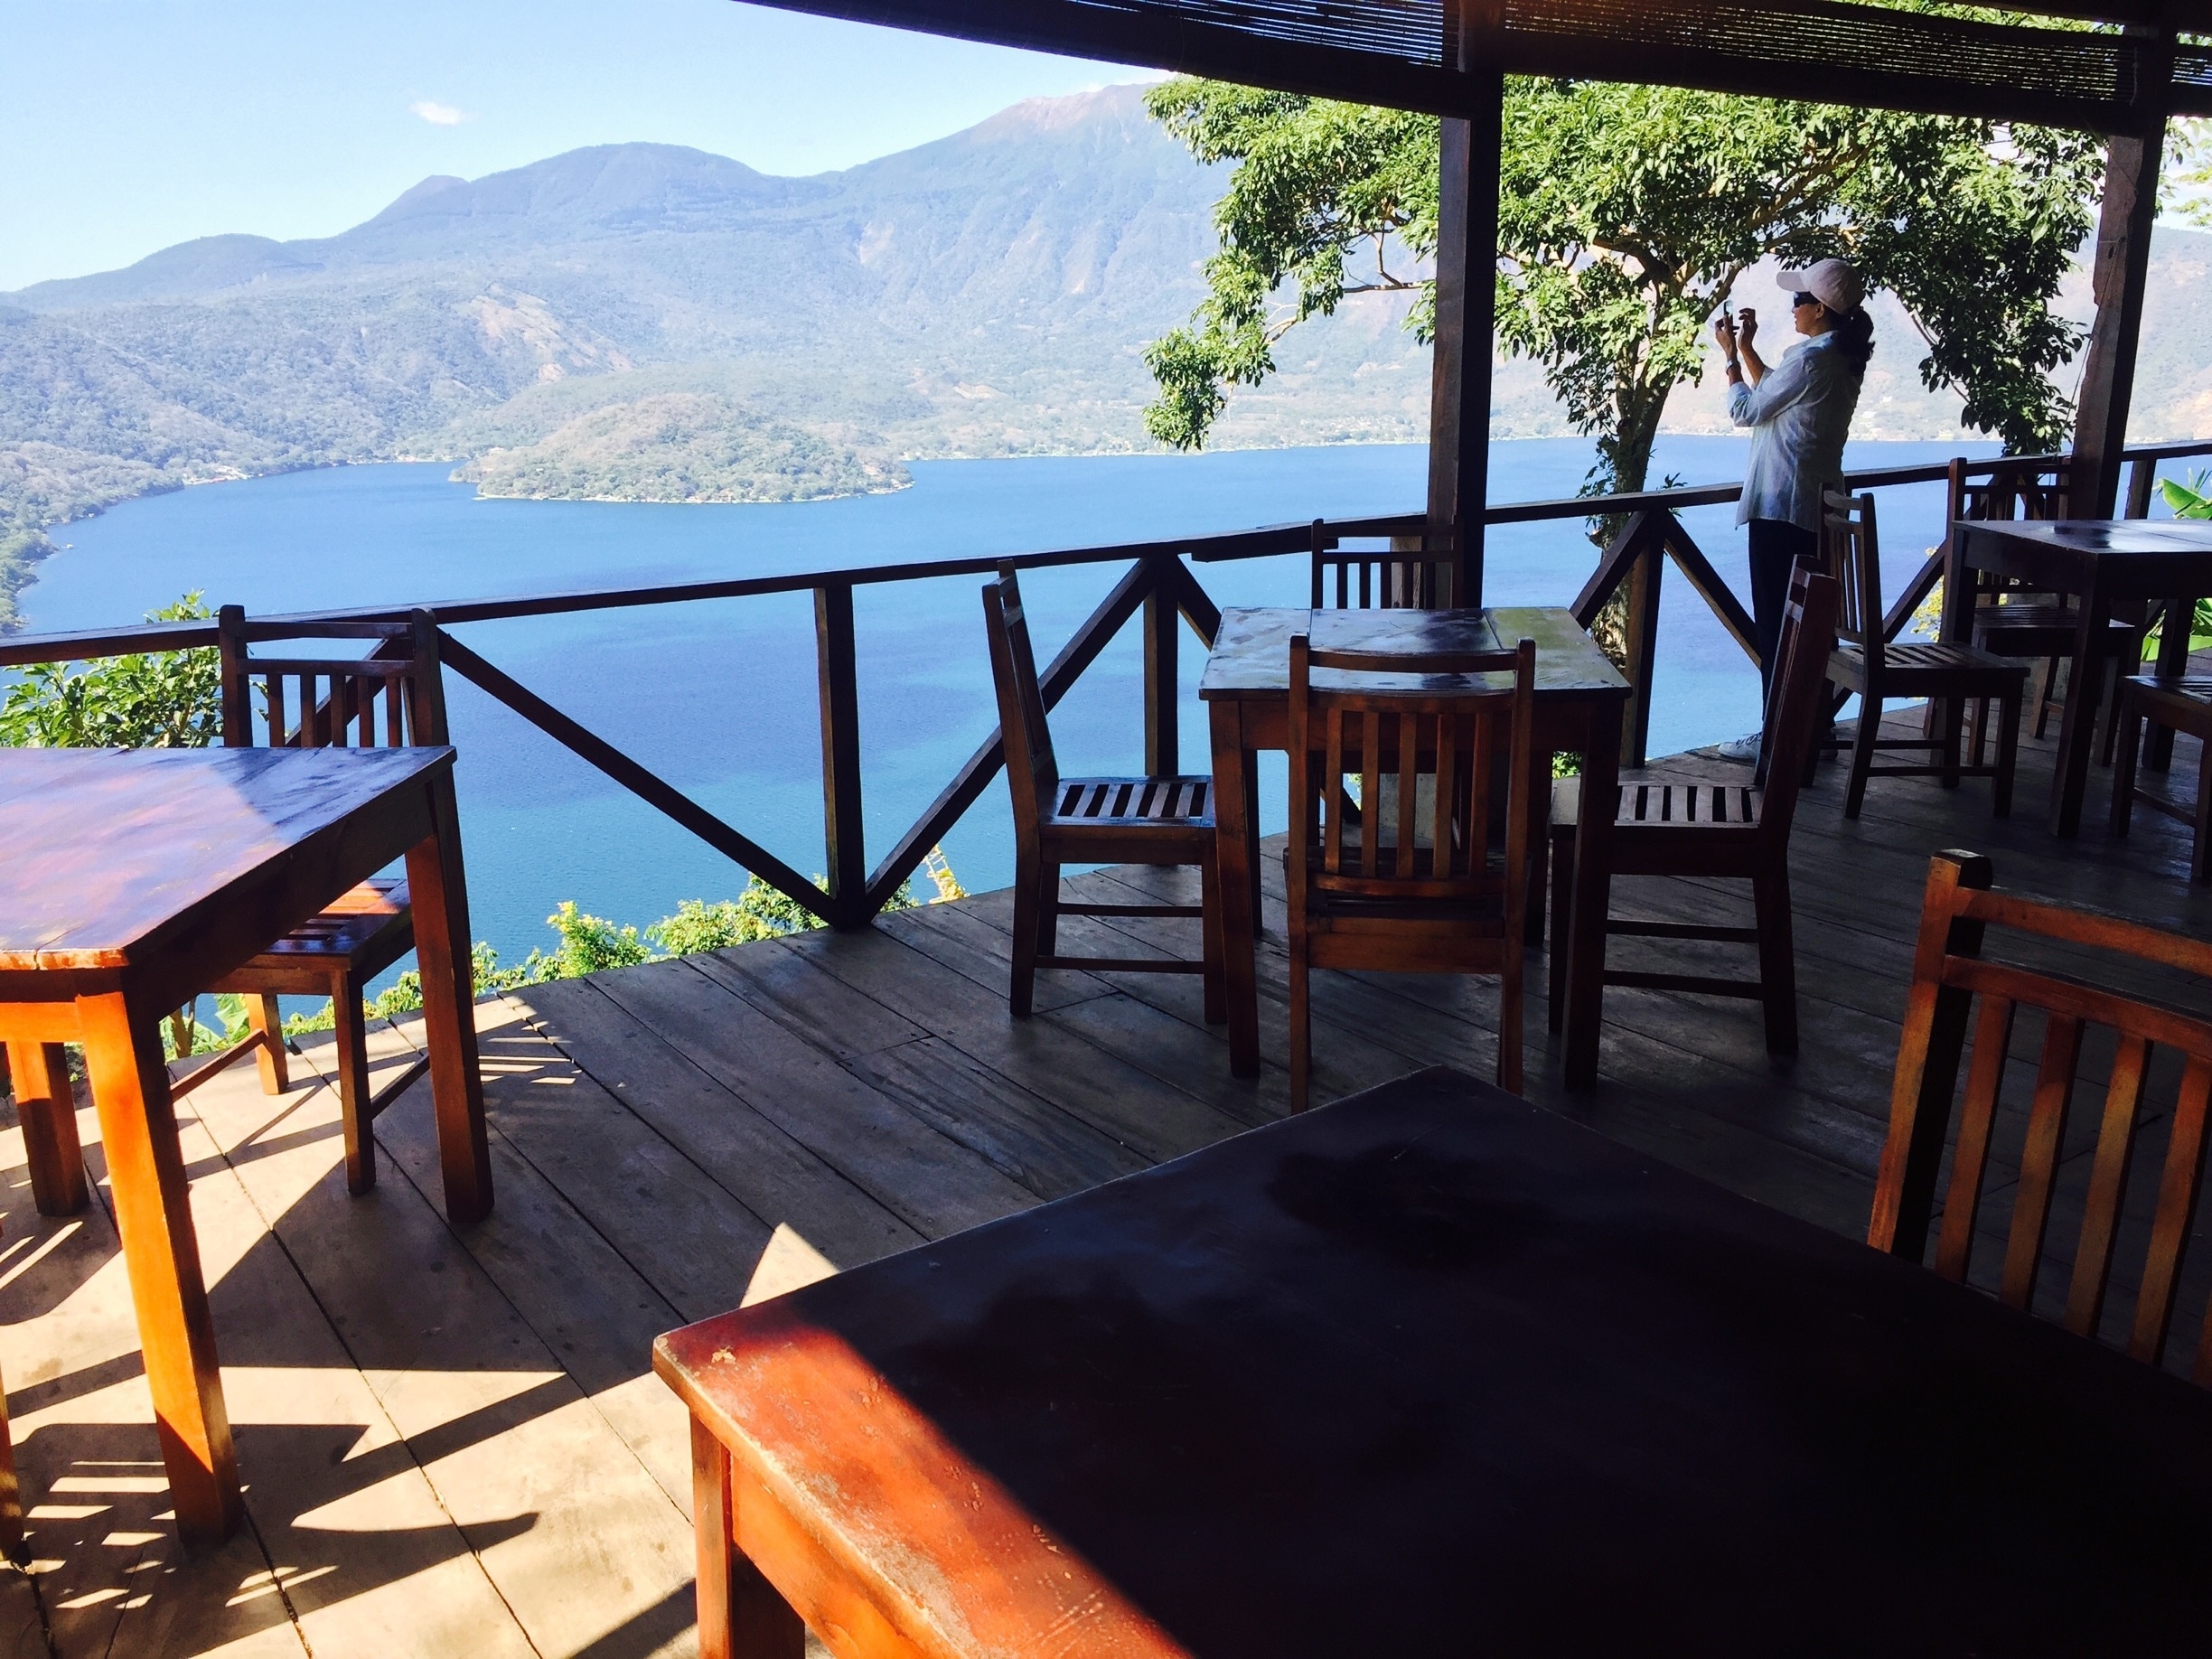 Great little restaurant overlooking the lake in volcano